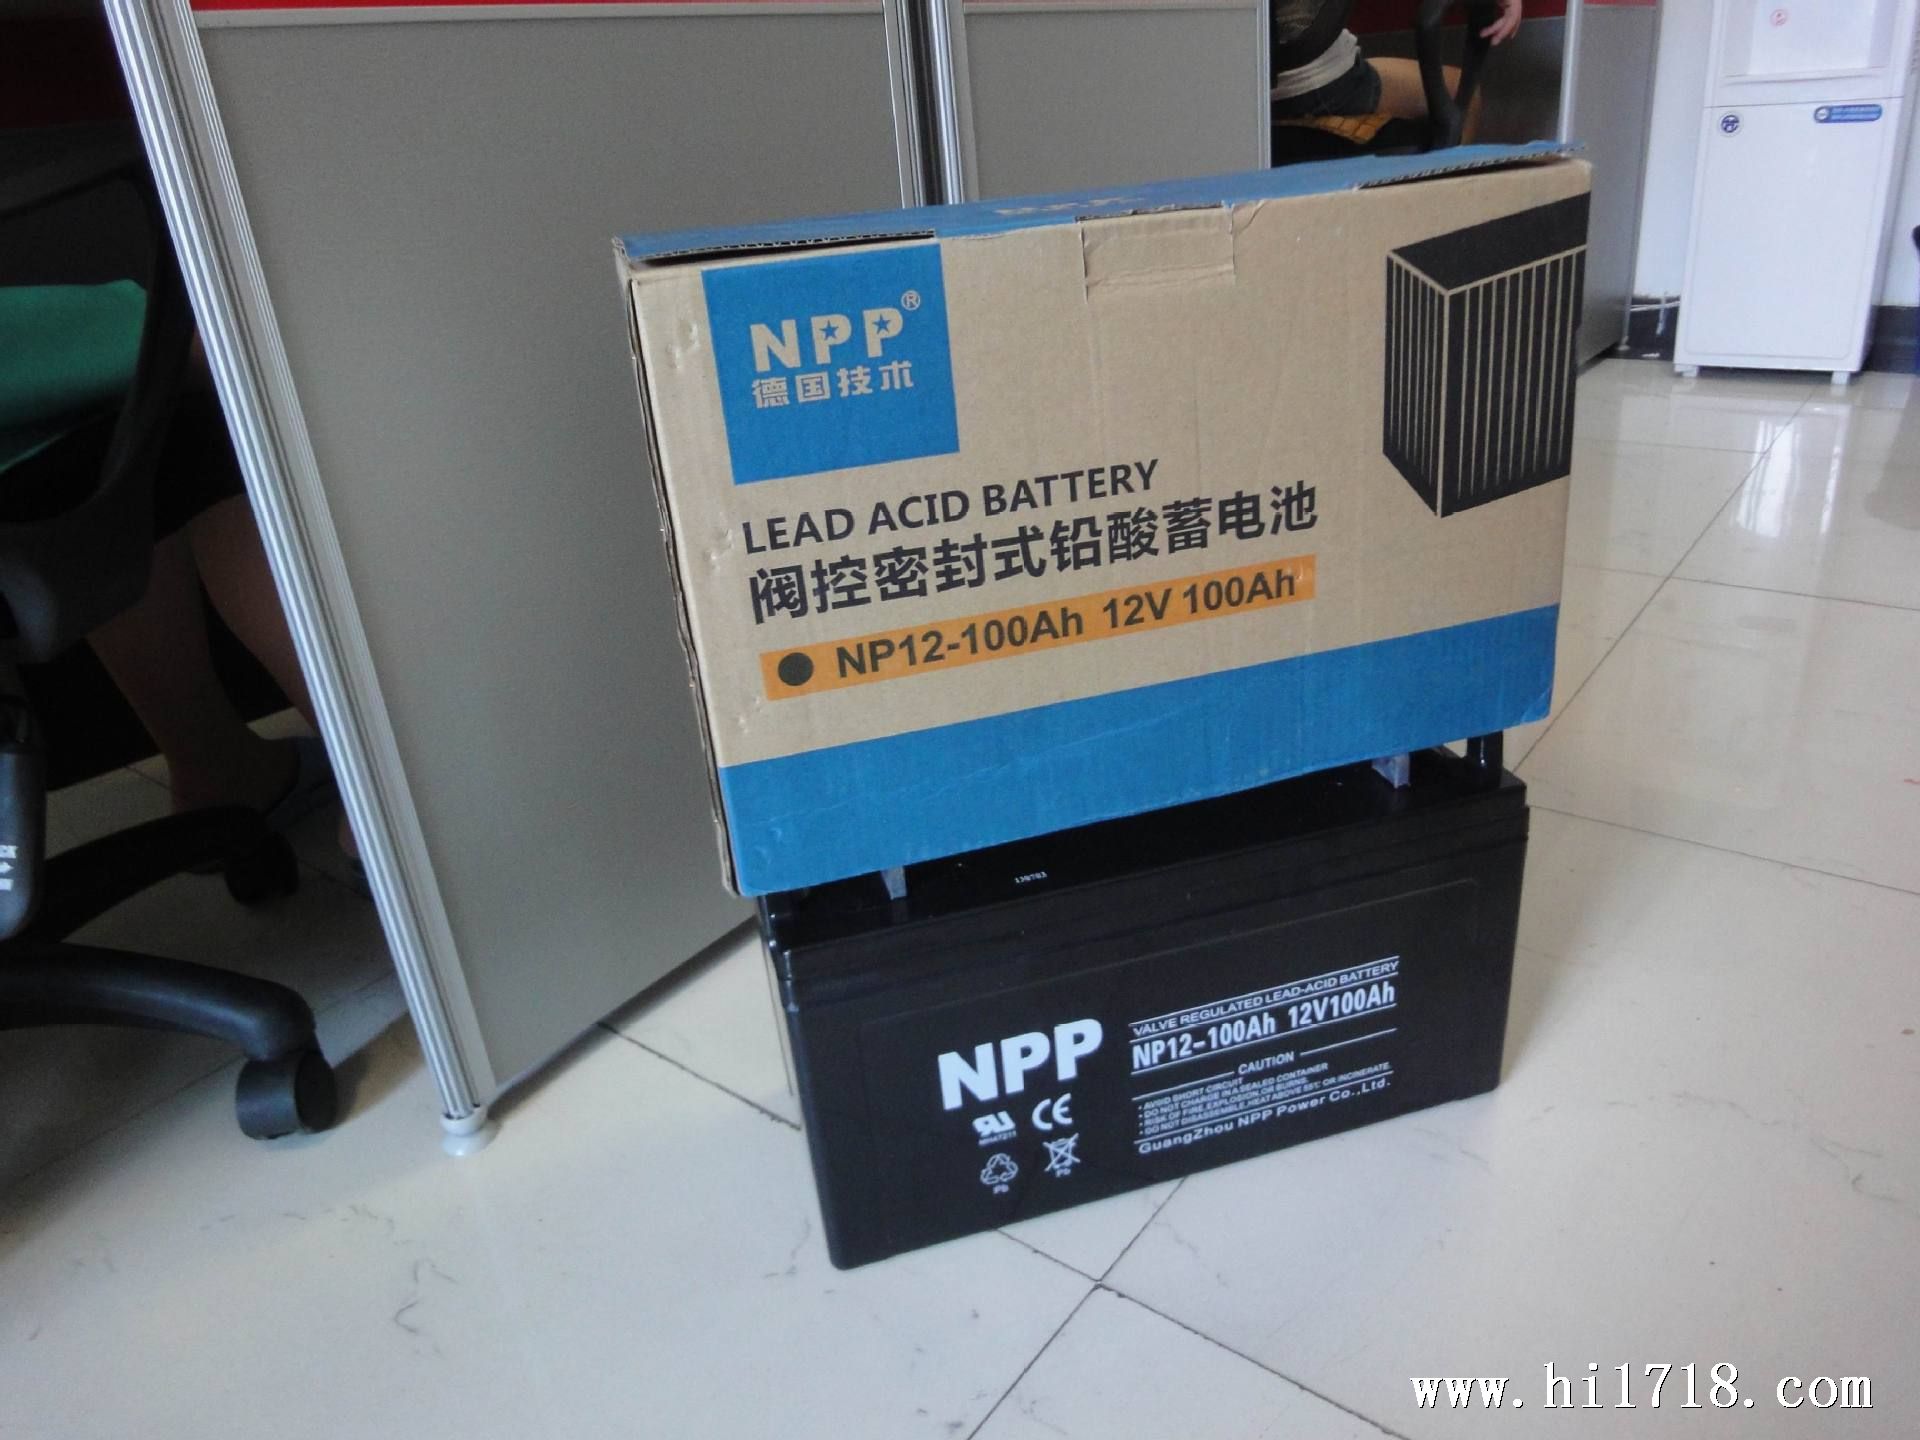 NPP NP12-100AH 7